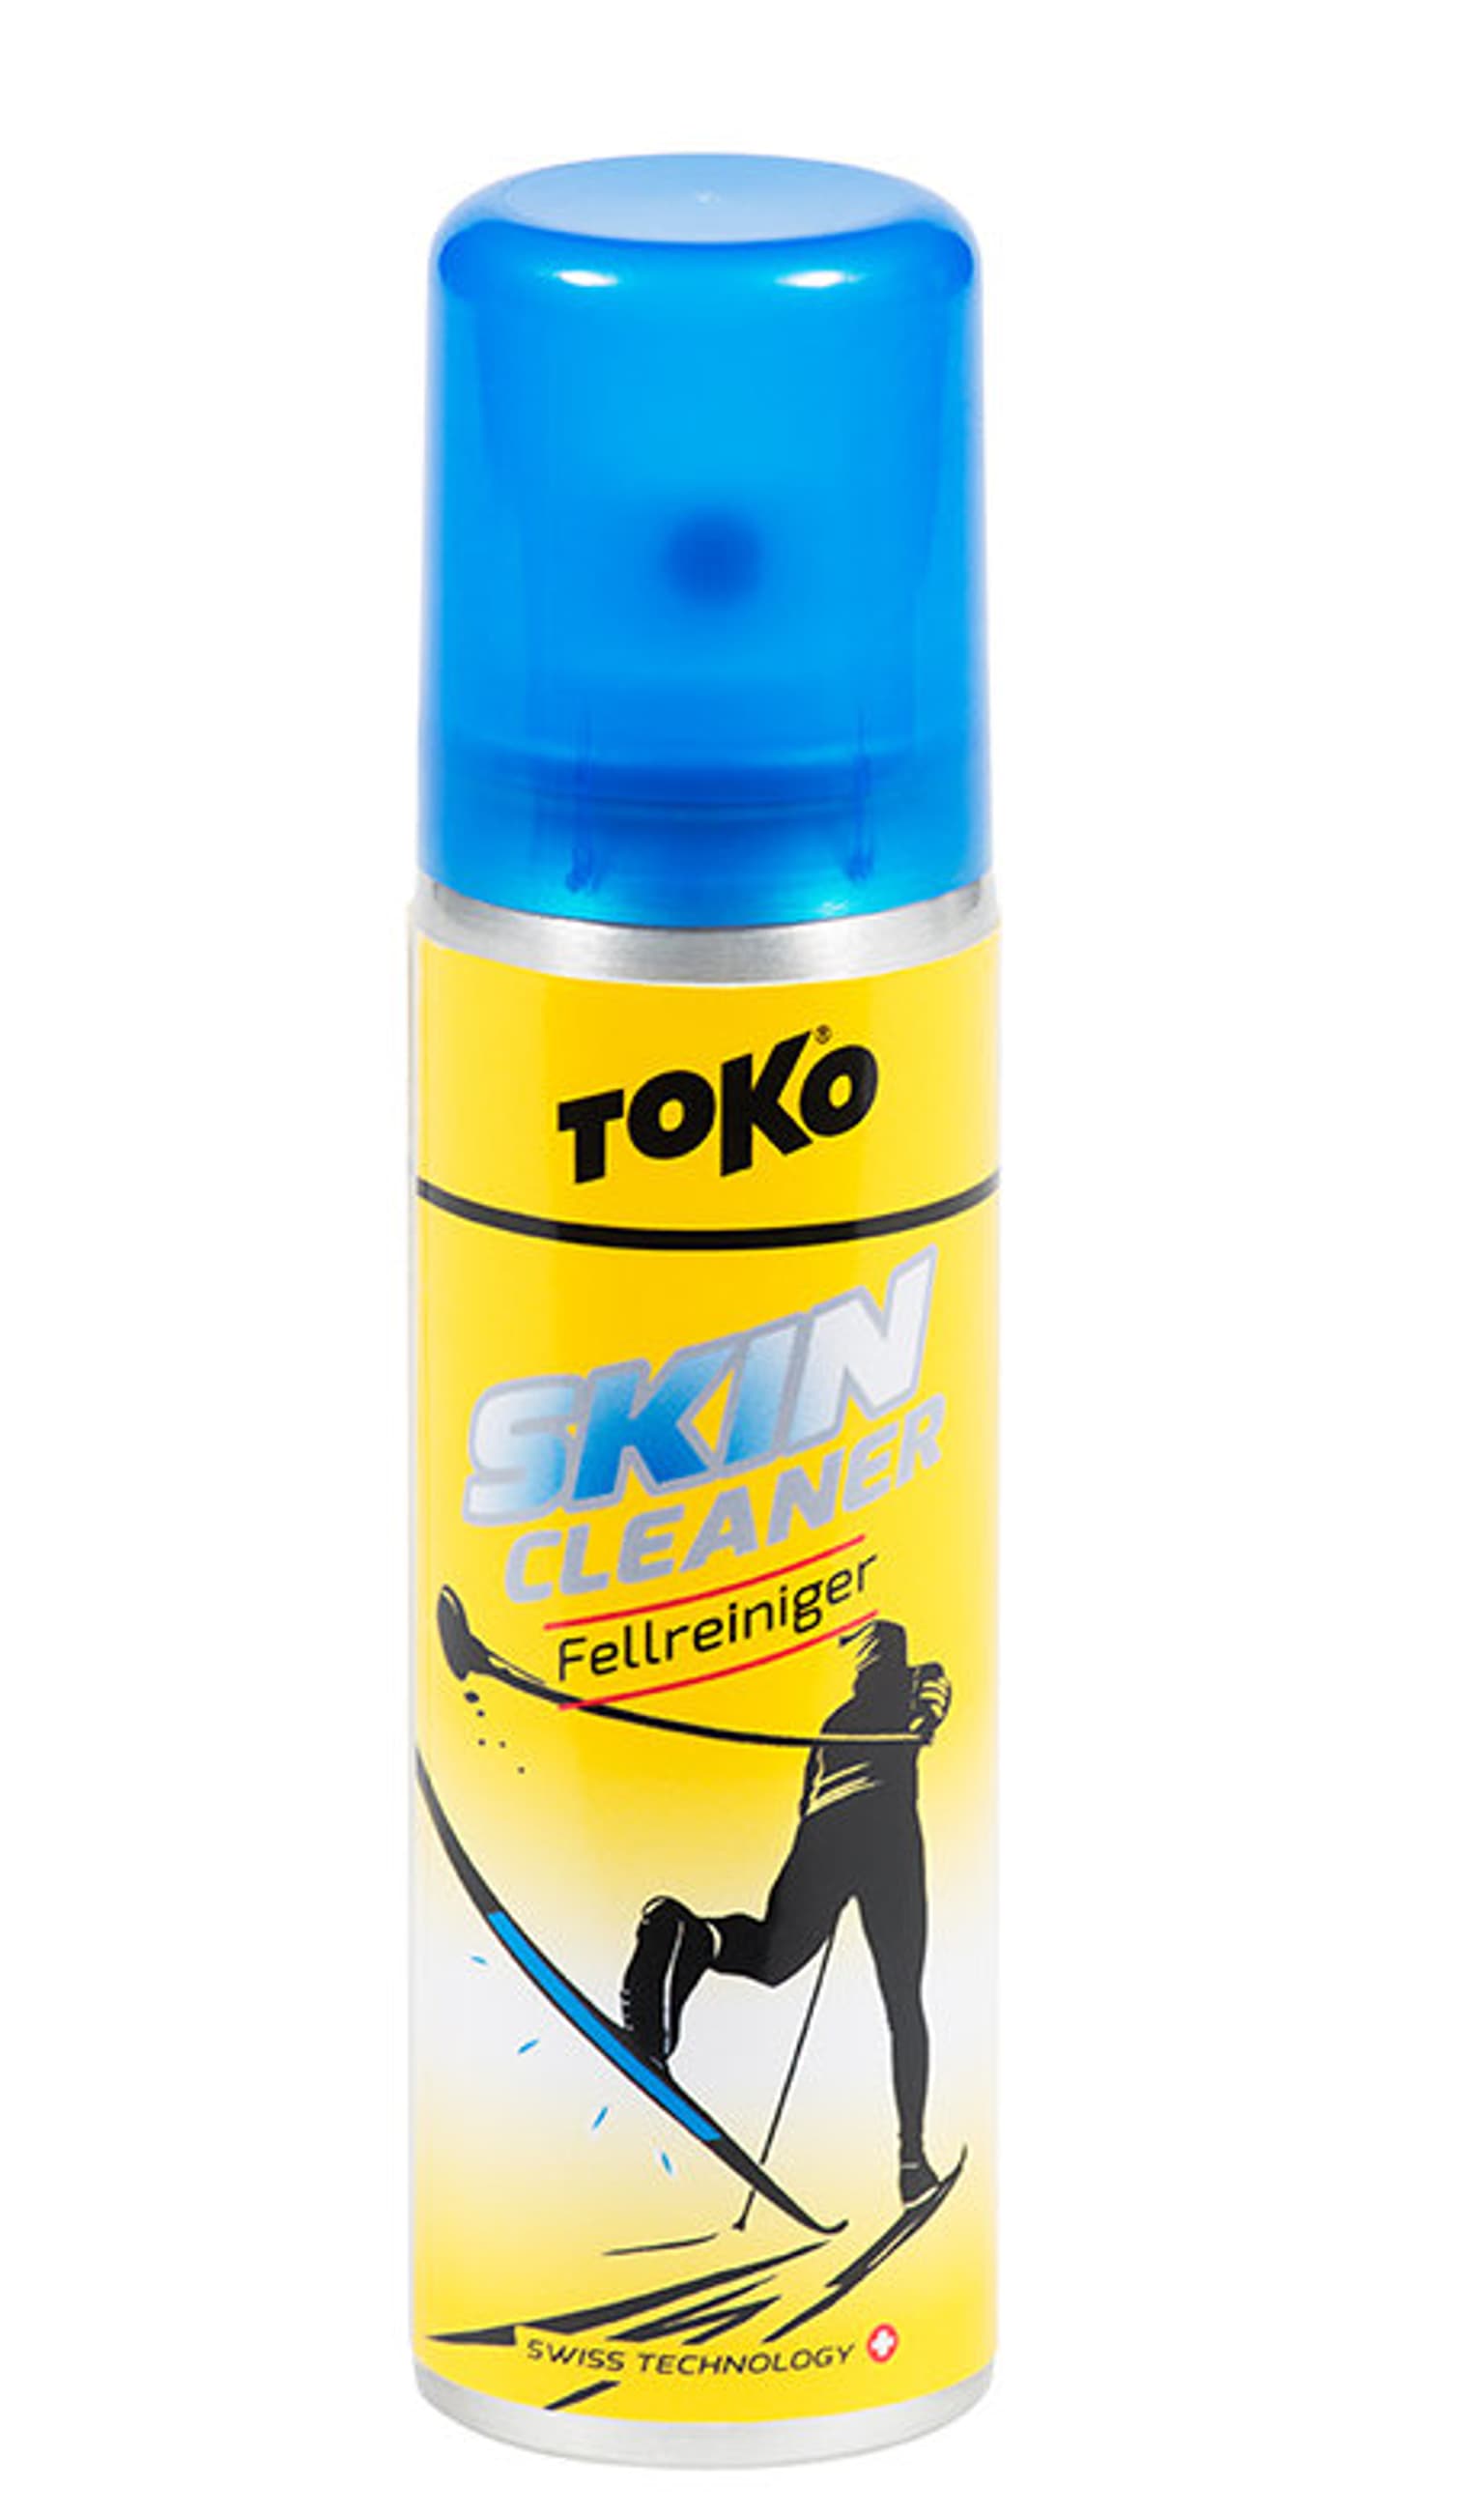 Toko Toko Skin-Cleaner Skin-Cleaner 1